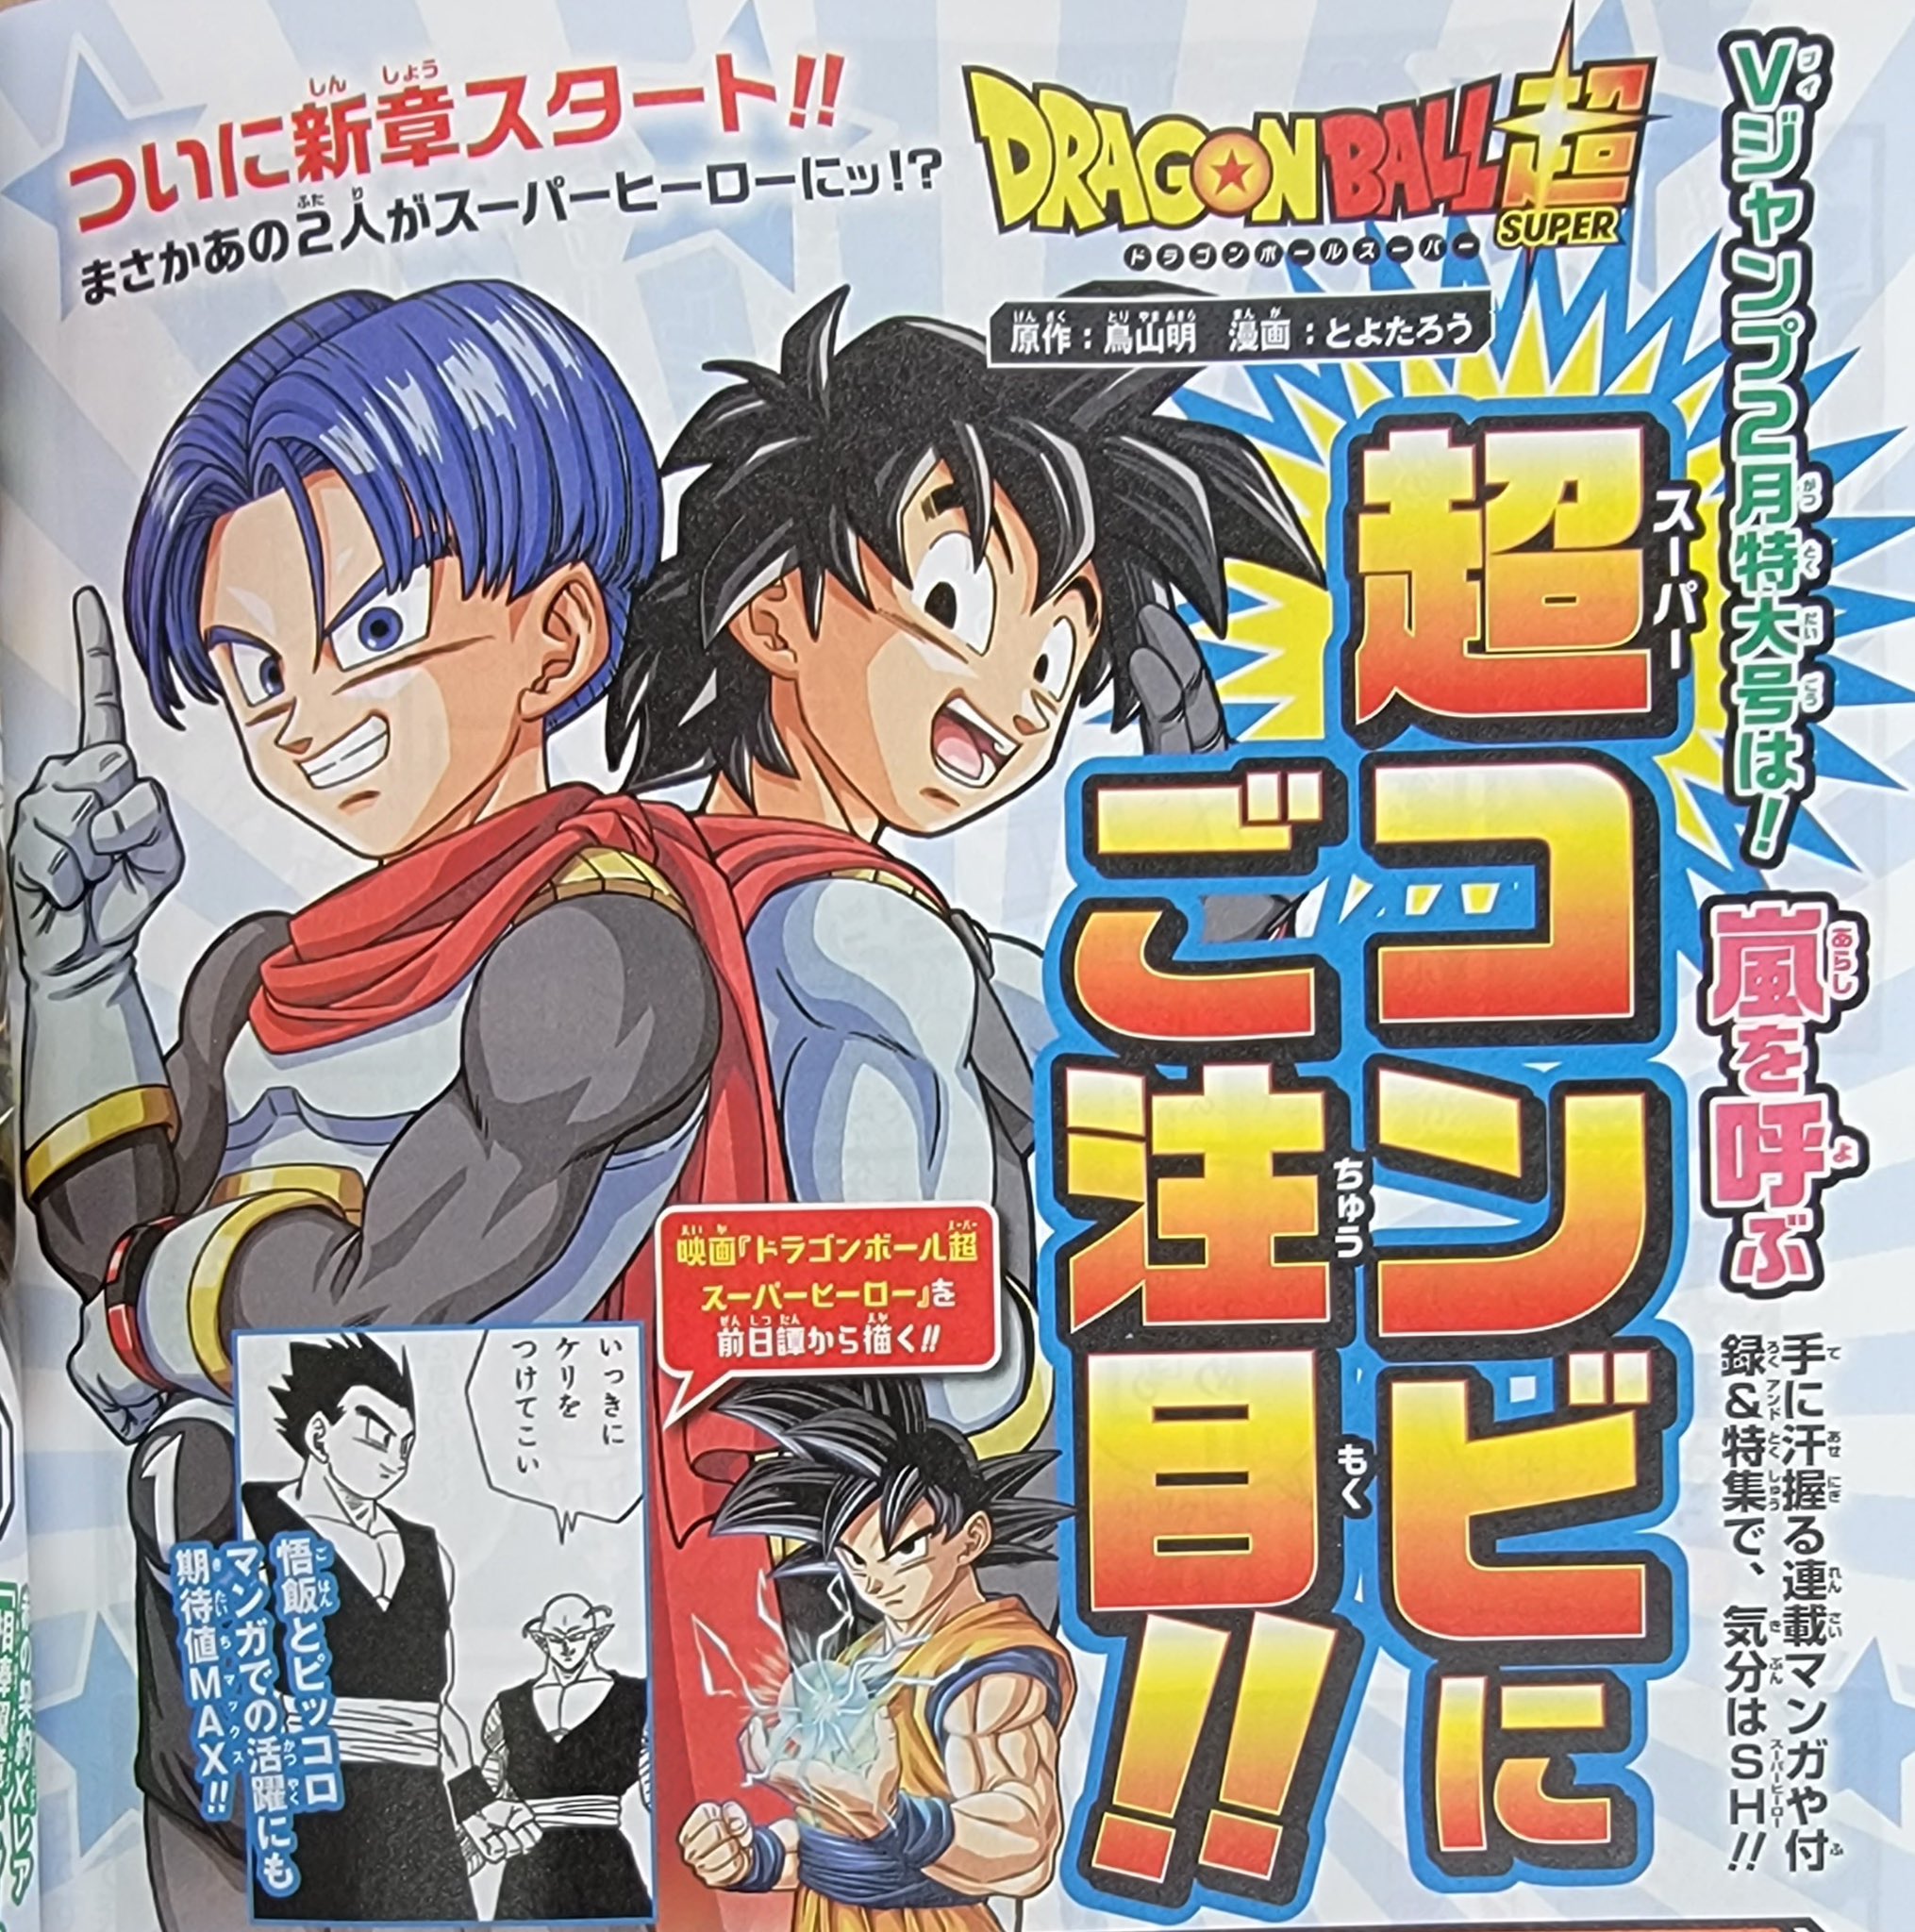 Leer Dragon Ball Super Manga Capitulo 89 en Español Gratis Online